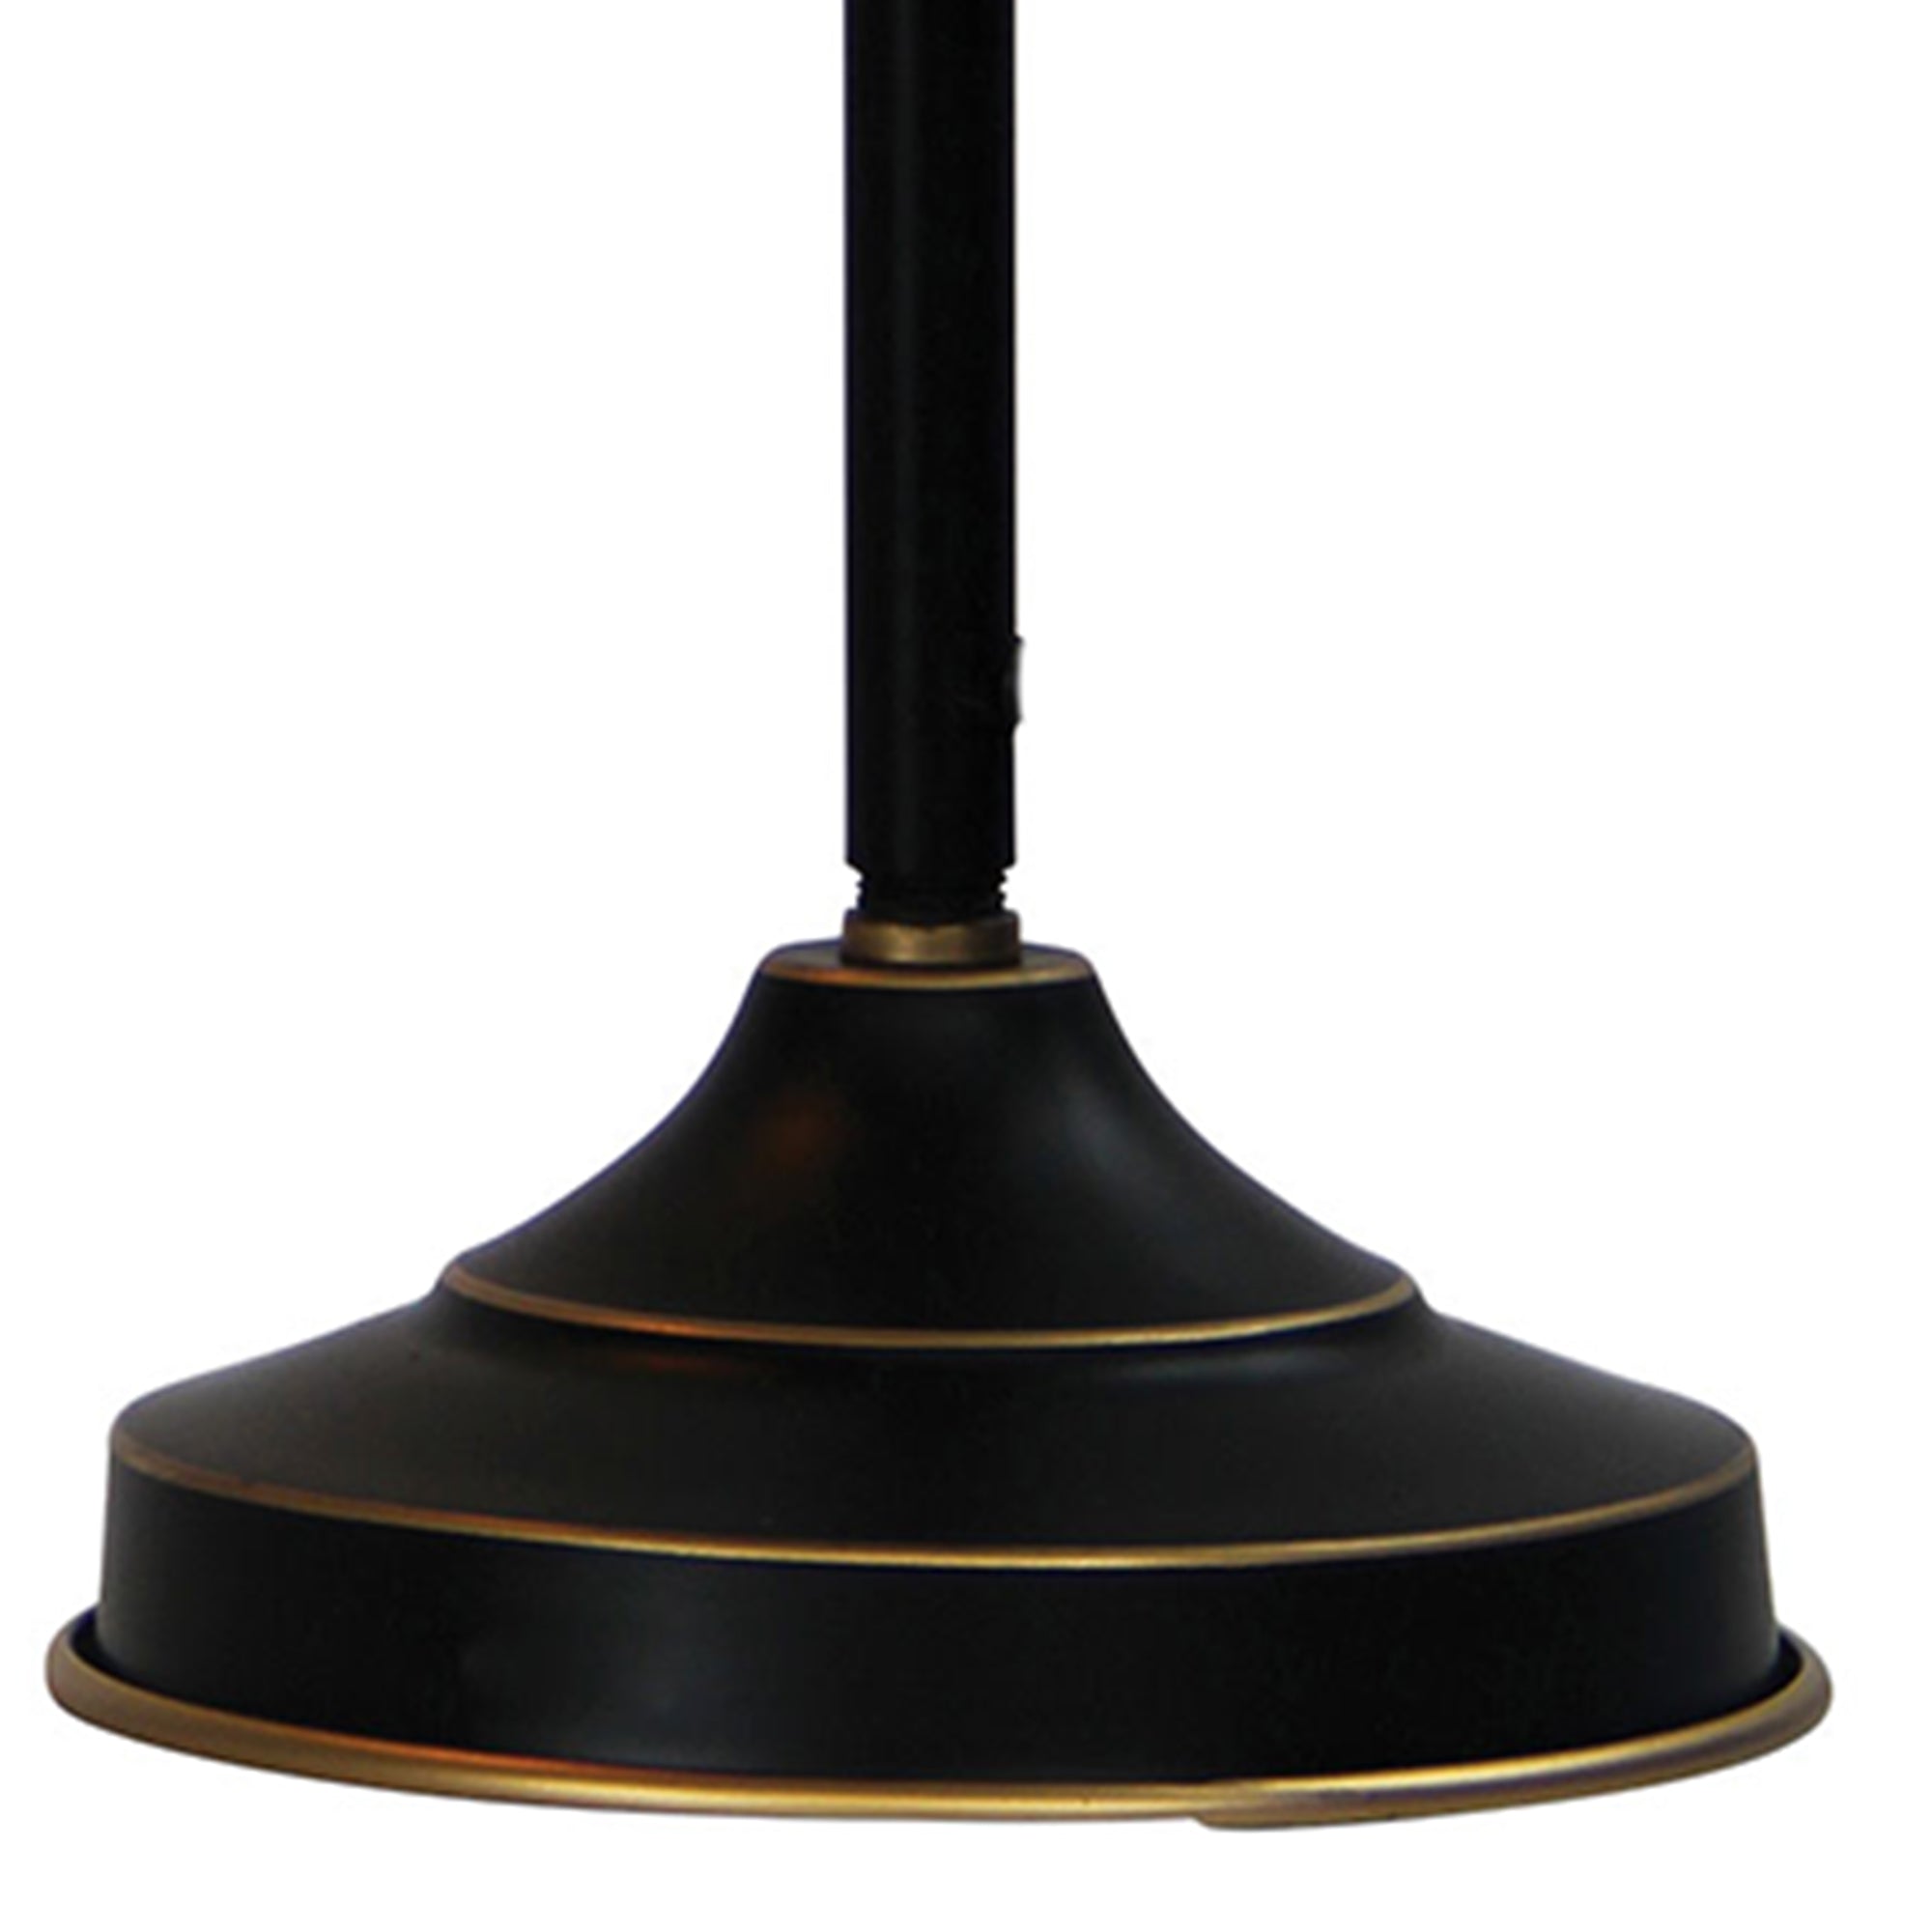 Detroit Retro Industrial Table or Desk Lamp Rubbed Bronze